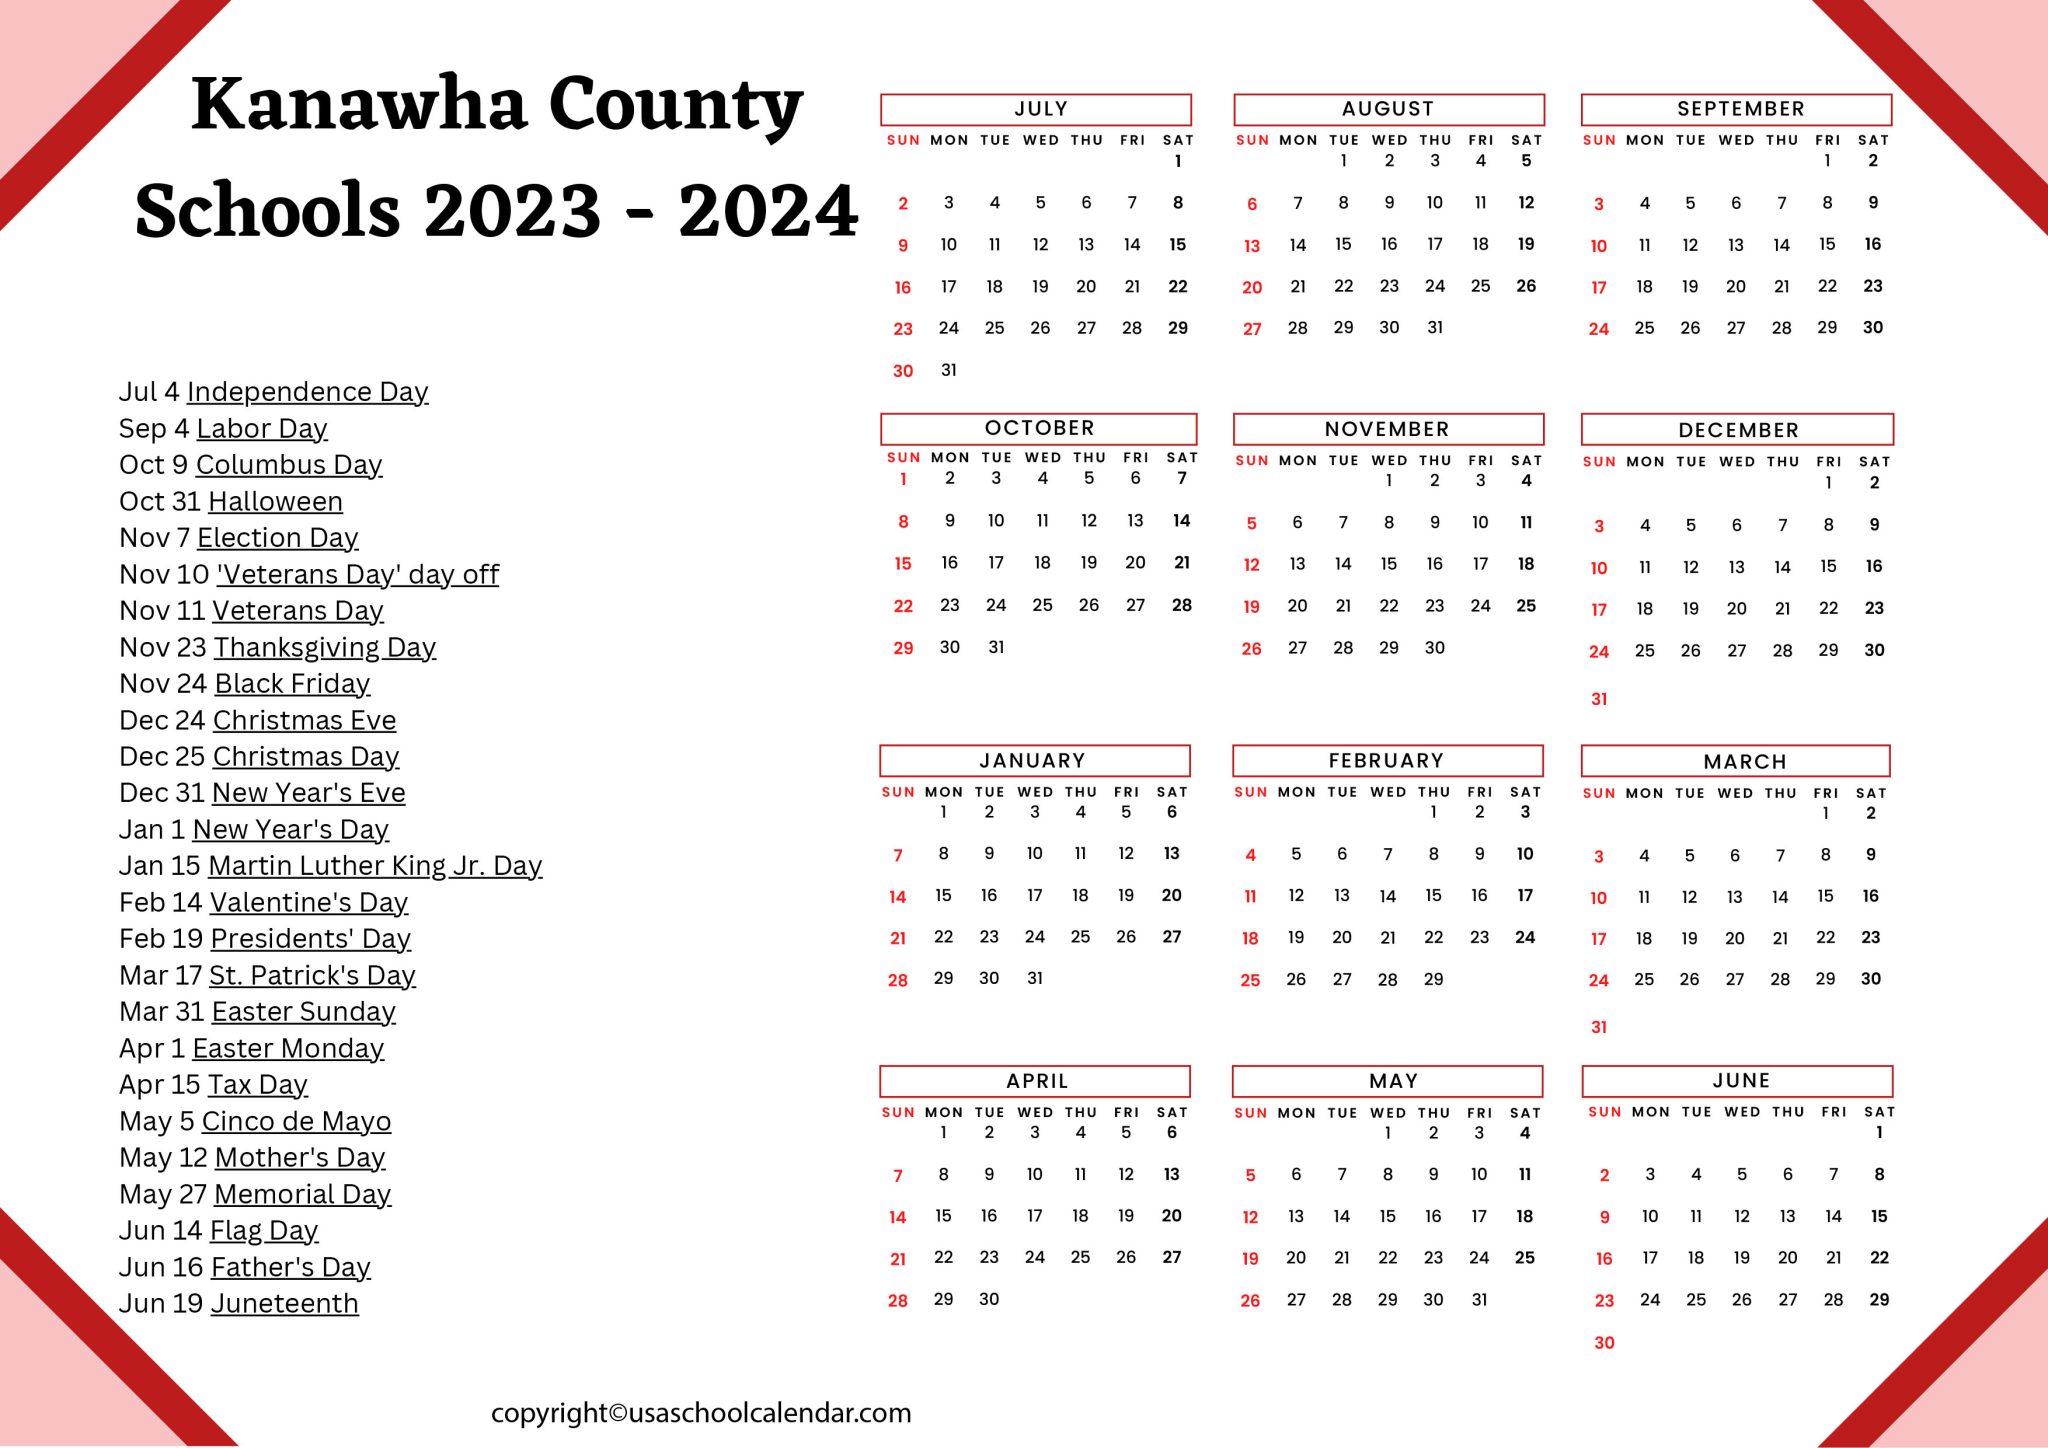 kanawha-county-schools-calendar-holidays-2023-2024